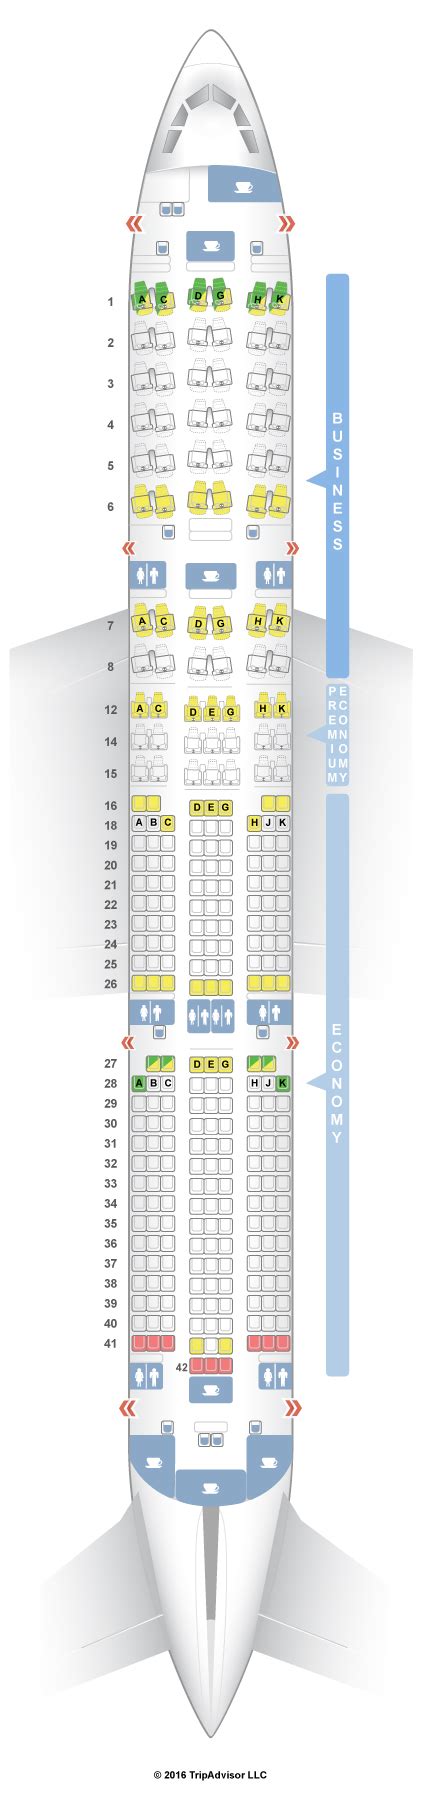 Seatguru Seat Map Lufthansa Airbus A350 900 359 V1